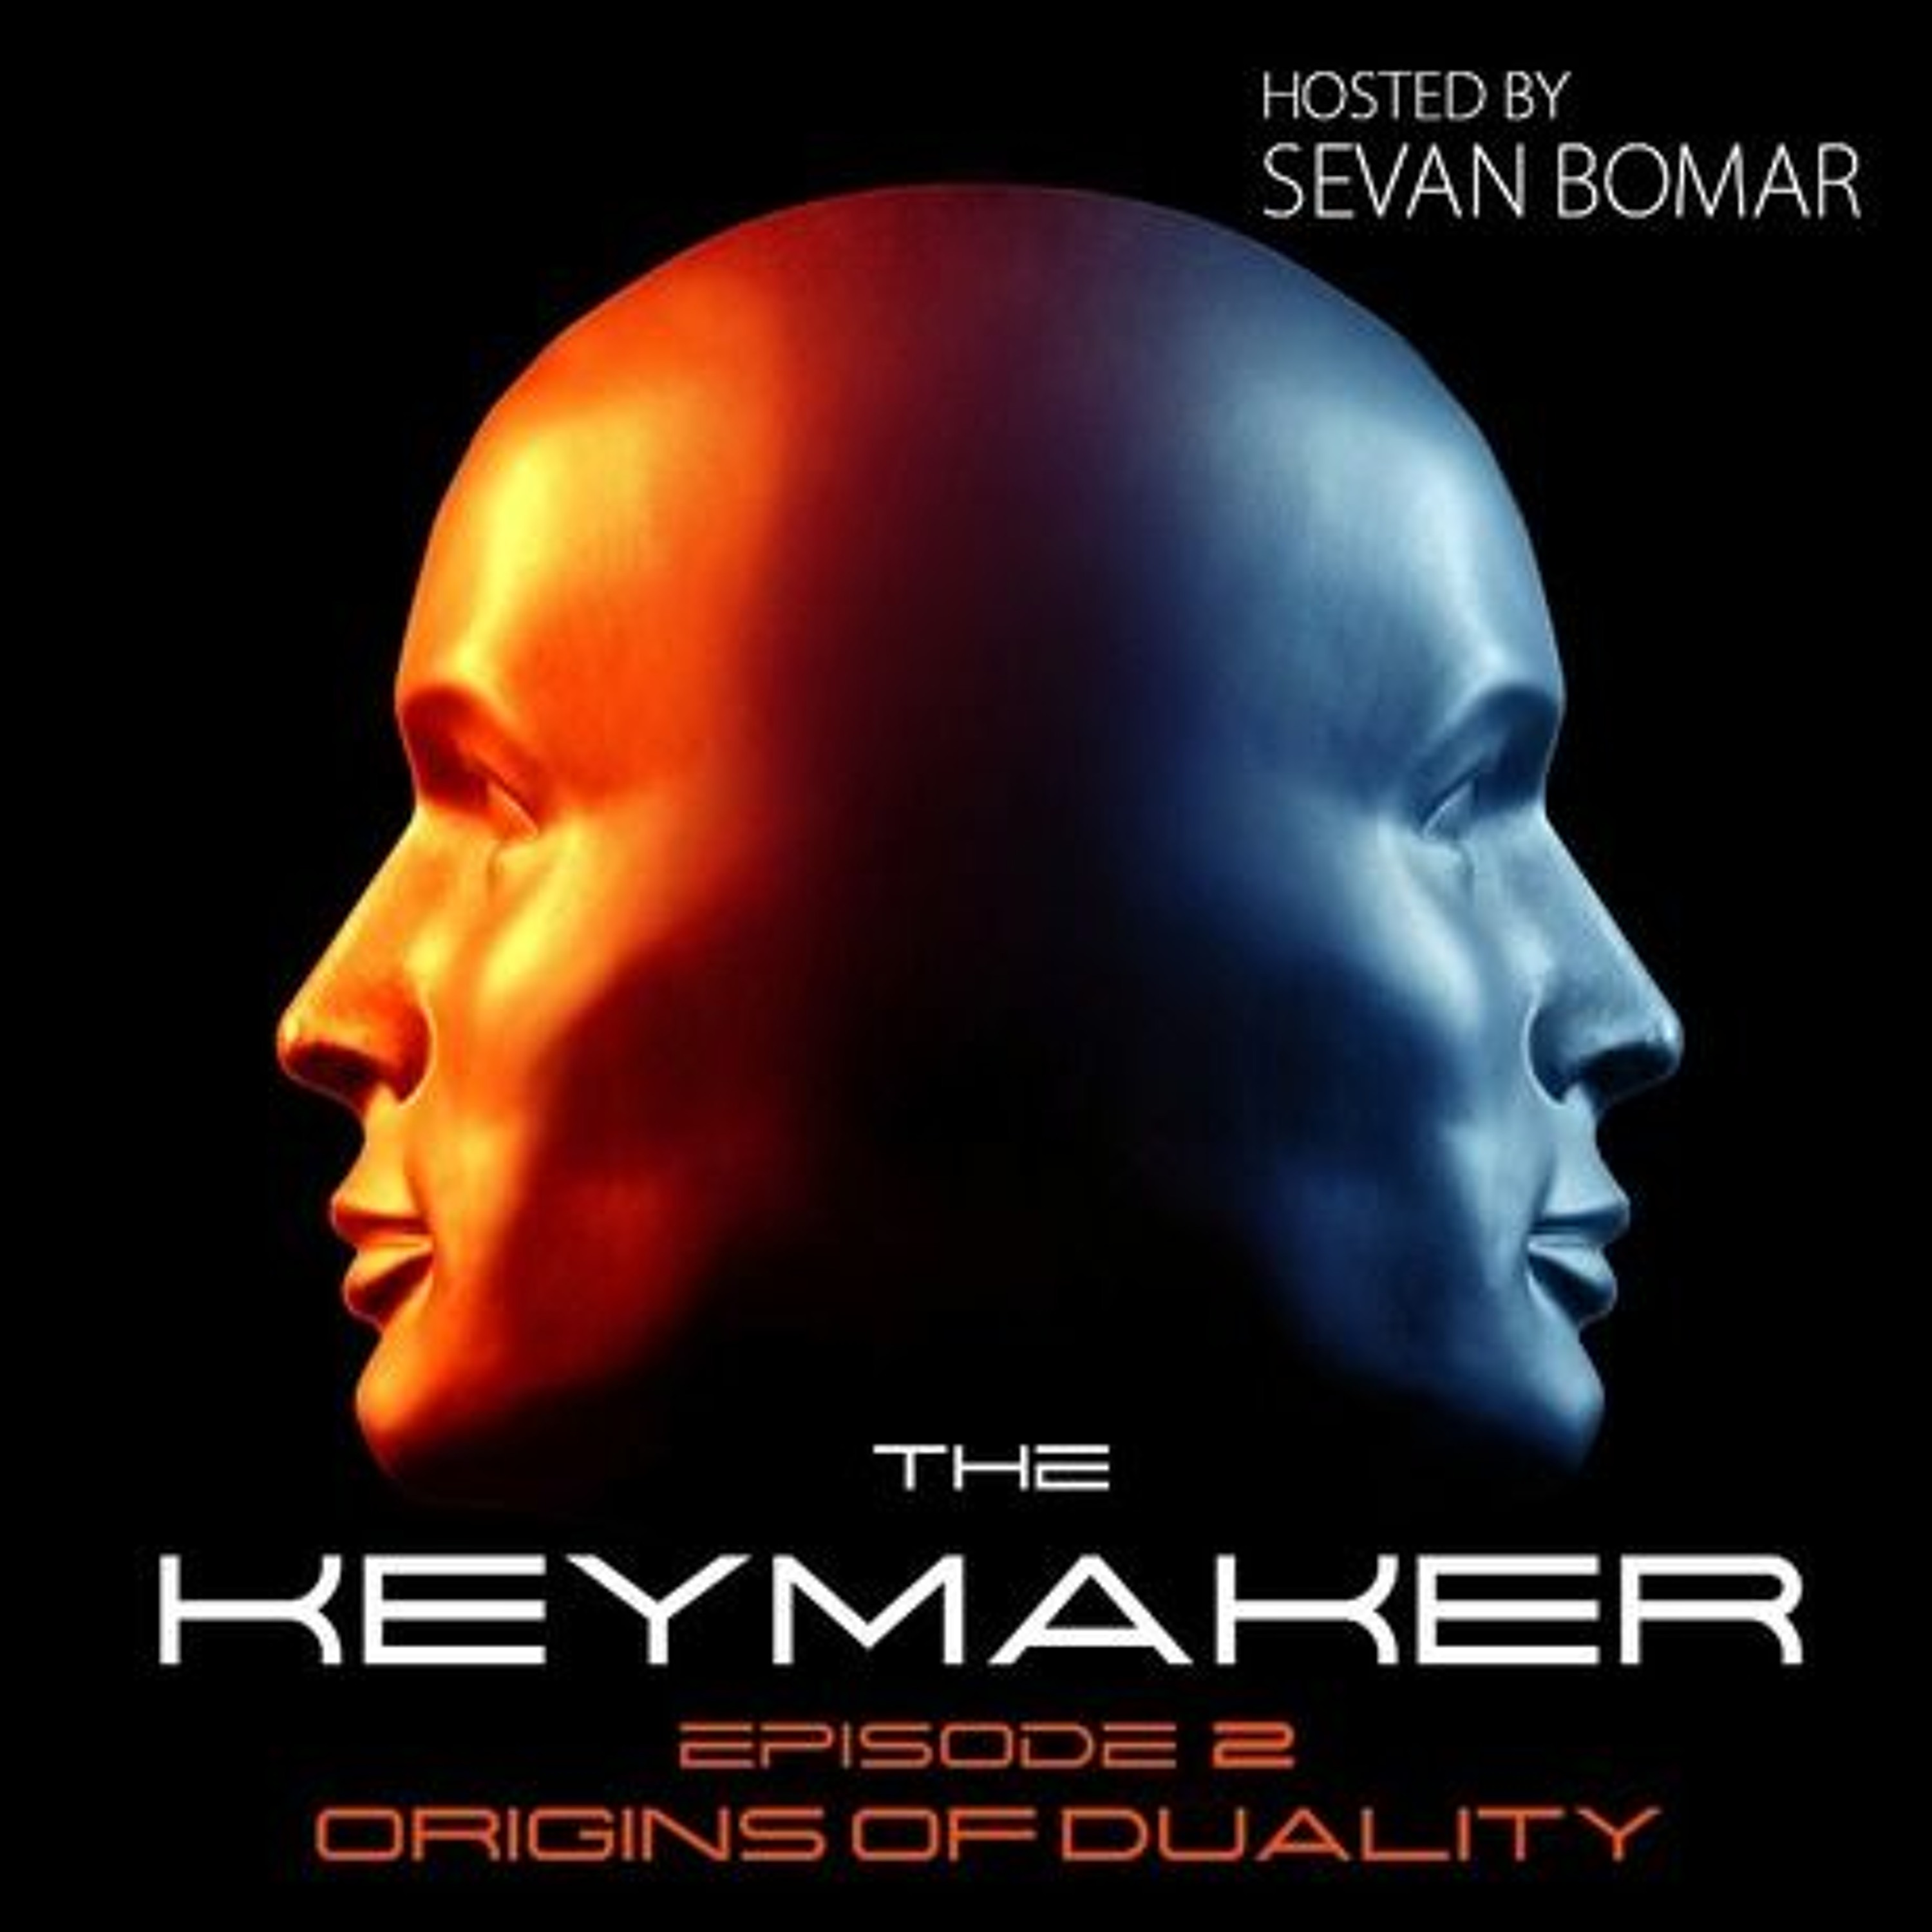 SEVAN BOMAR - THE KEYMAKER EPISODE 2 - ANCIENT ORIGINS OF DUALITY - NOV 14 2015